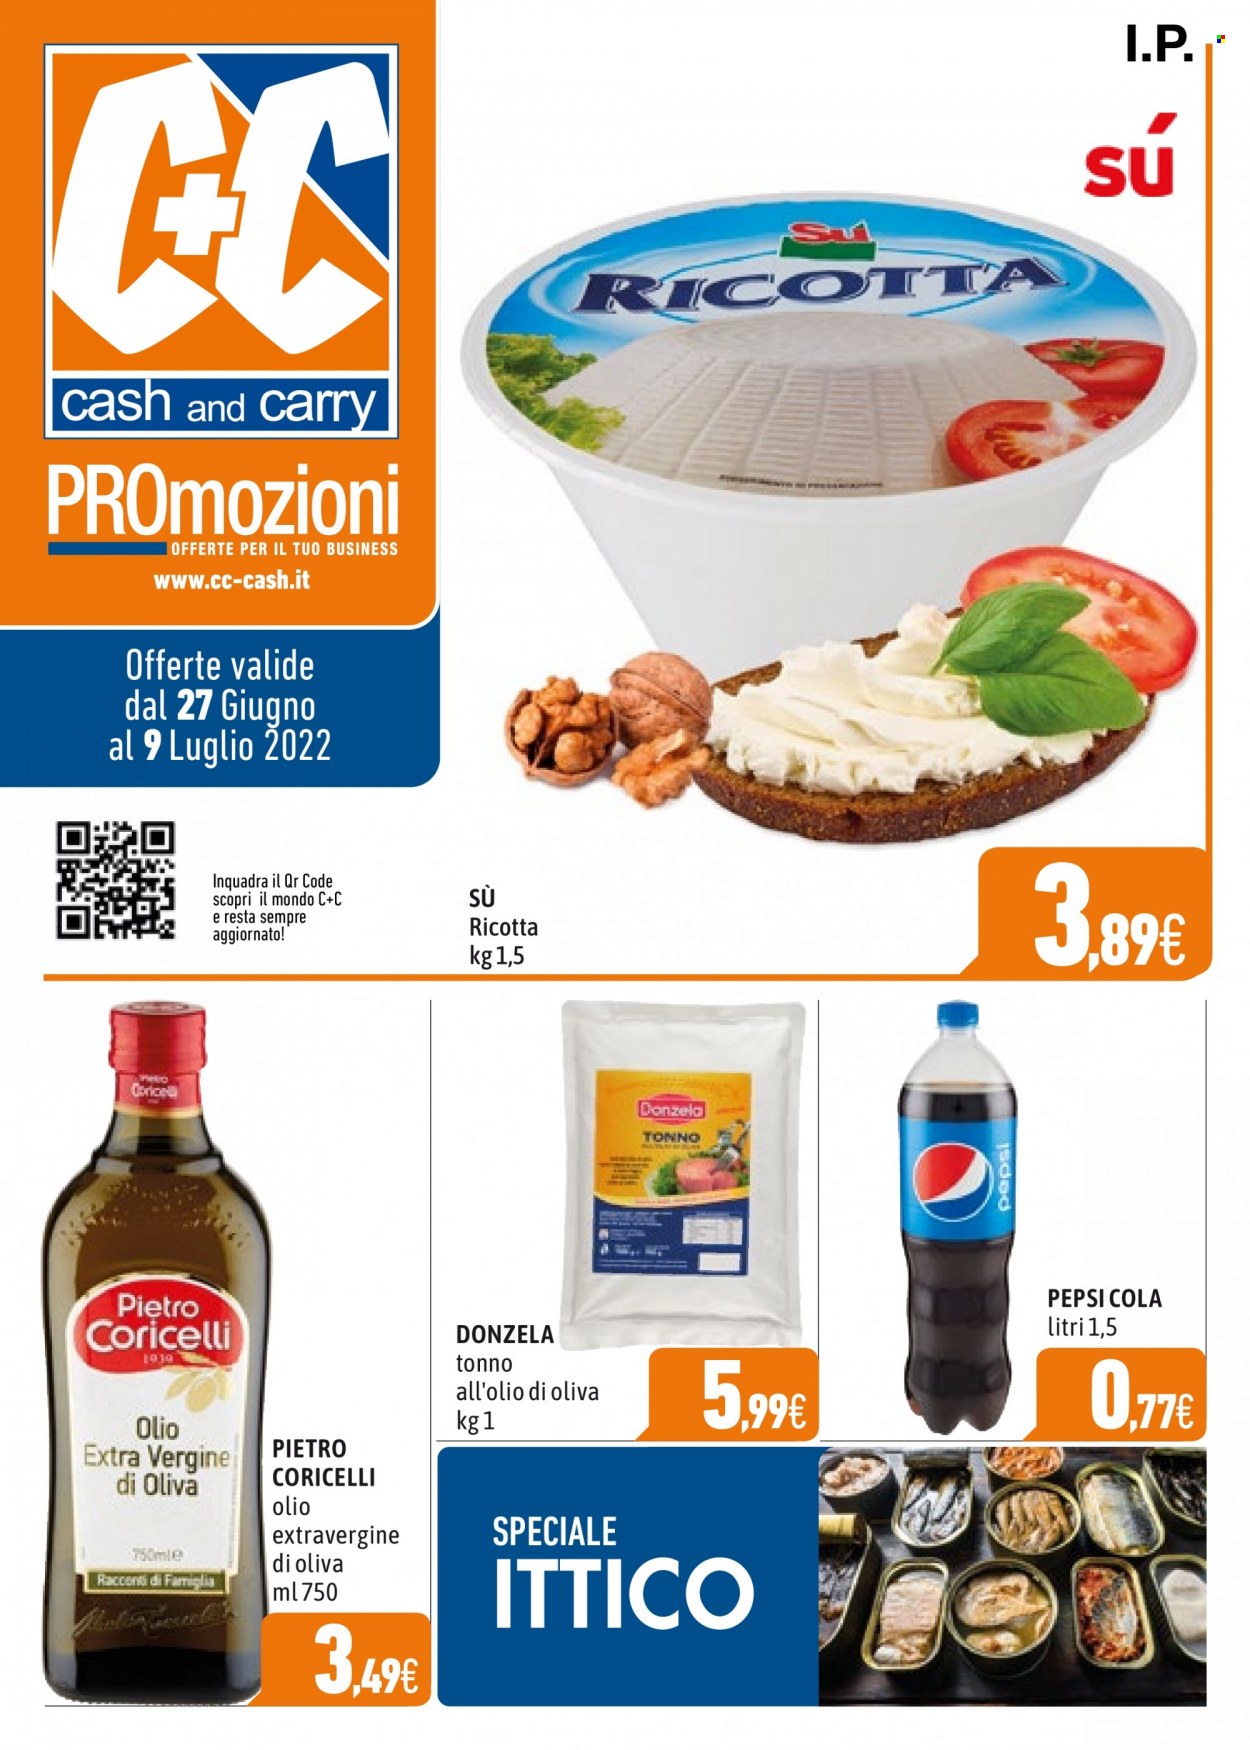 thumbnail - Volantino C+C Cash & Carry - 27/6/2022 - 9/7/2022 - Prodotti in offerta - tonno, formaggio, ricotta, tonno sott'olio, Pepsi, bibita gassata. Pagina 1.